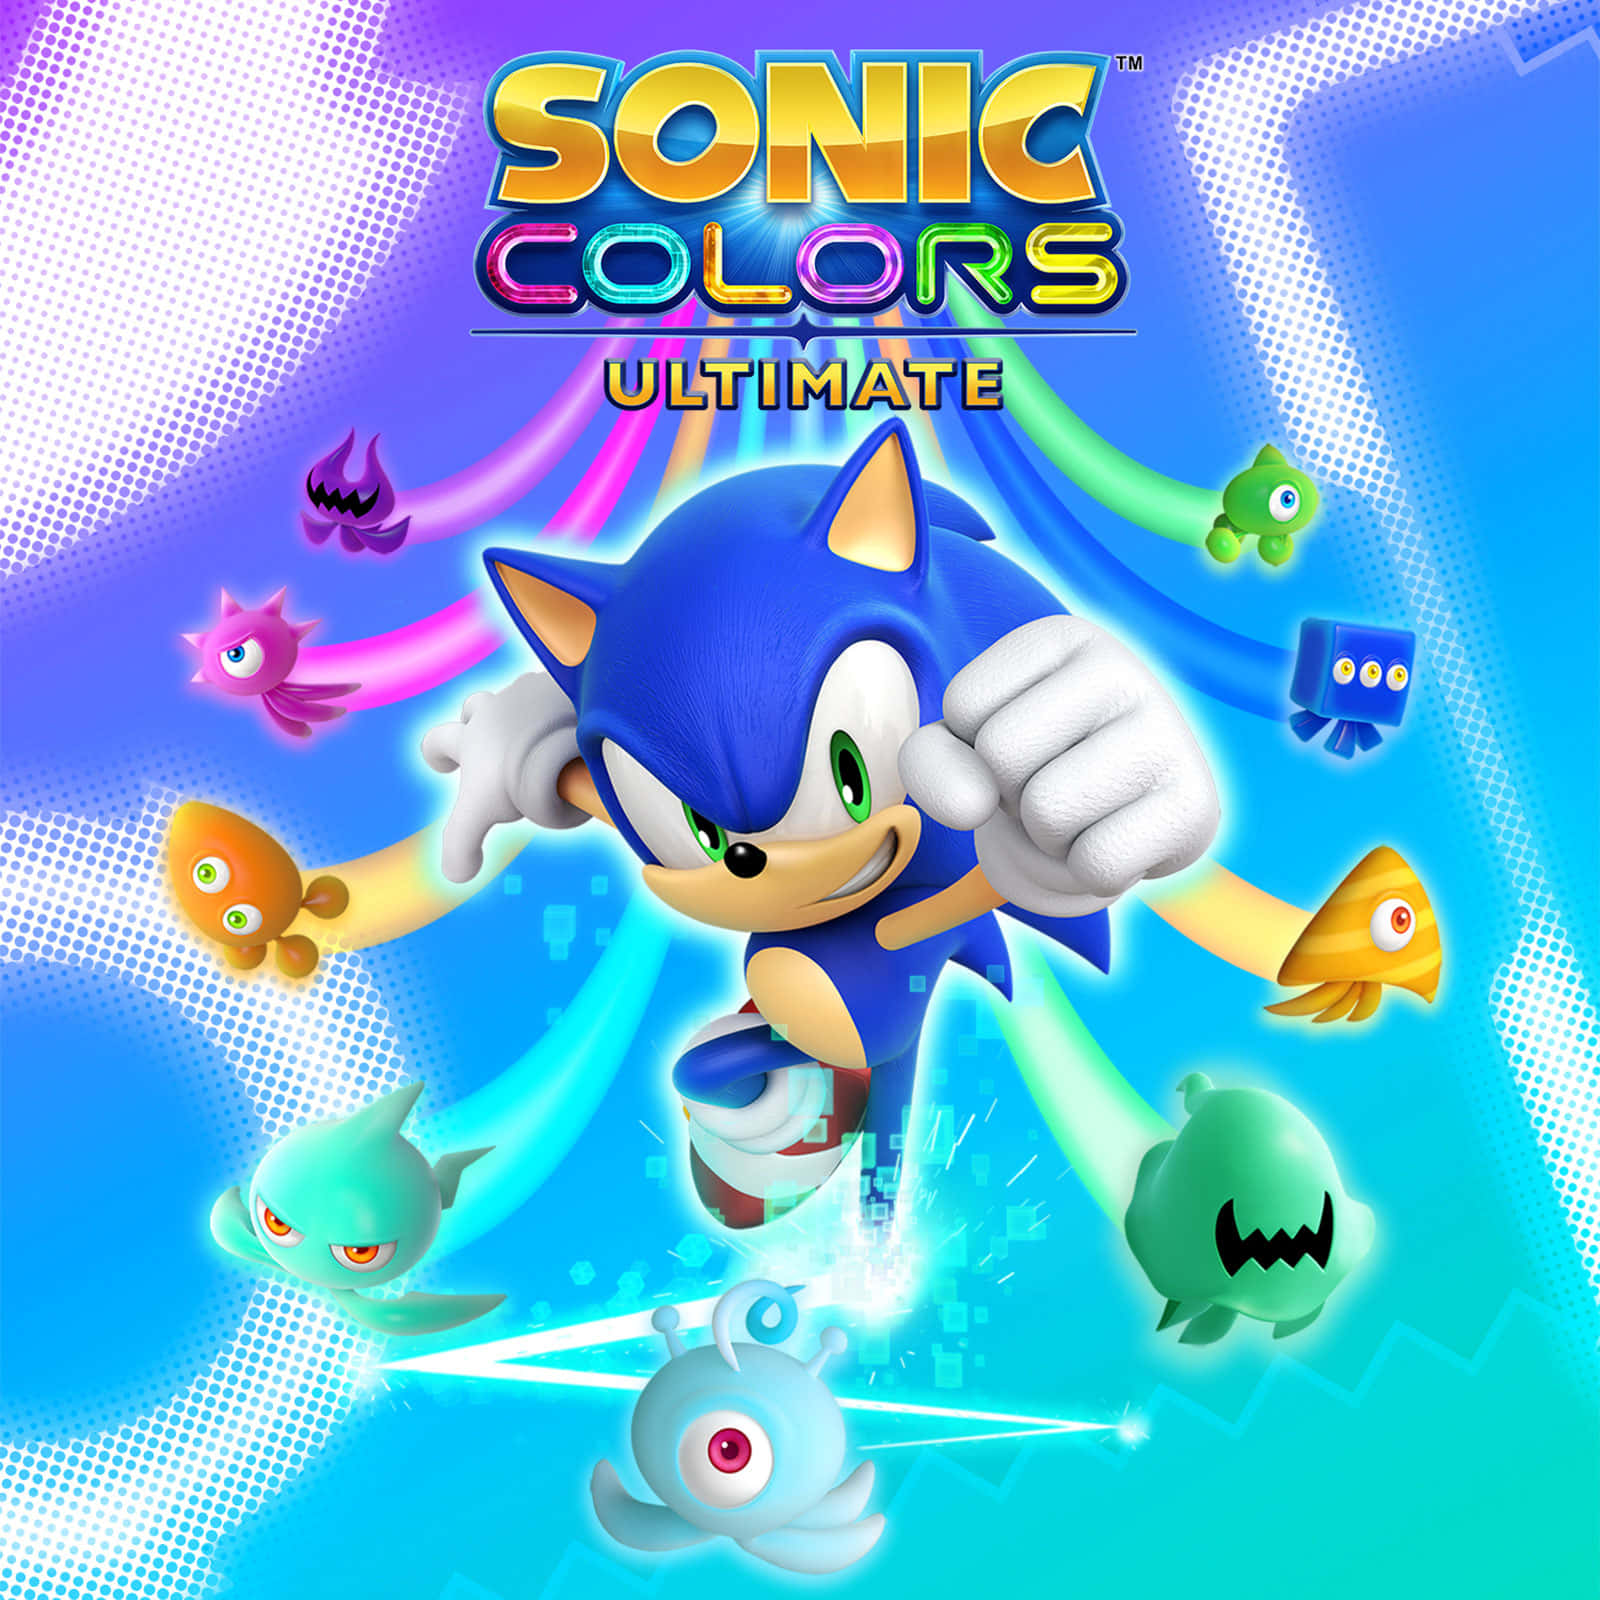 Soniccolors Ultimate 2.